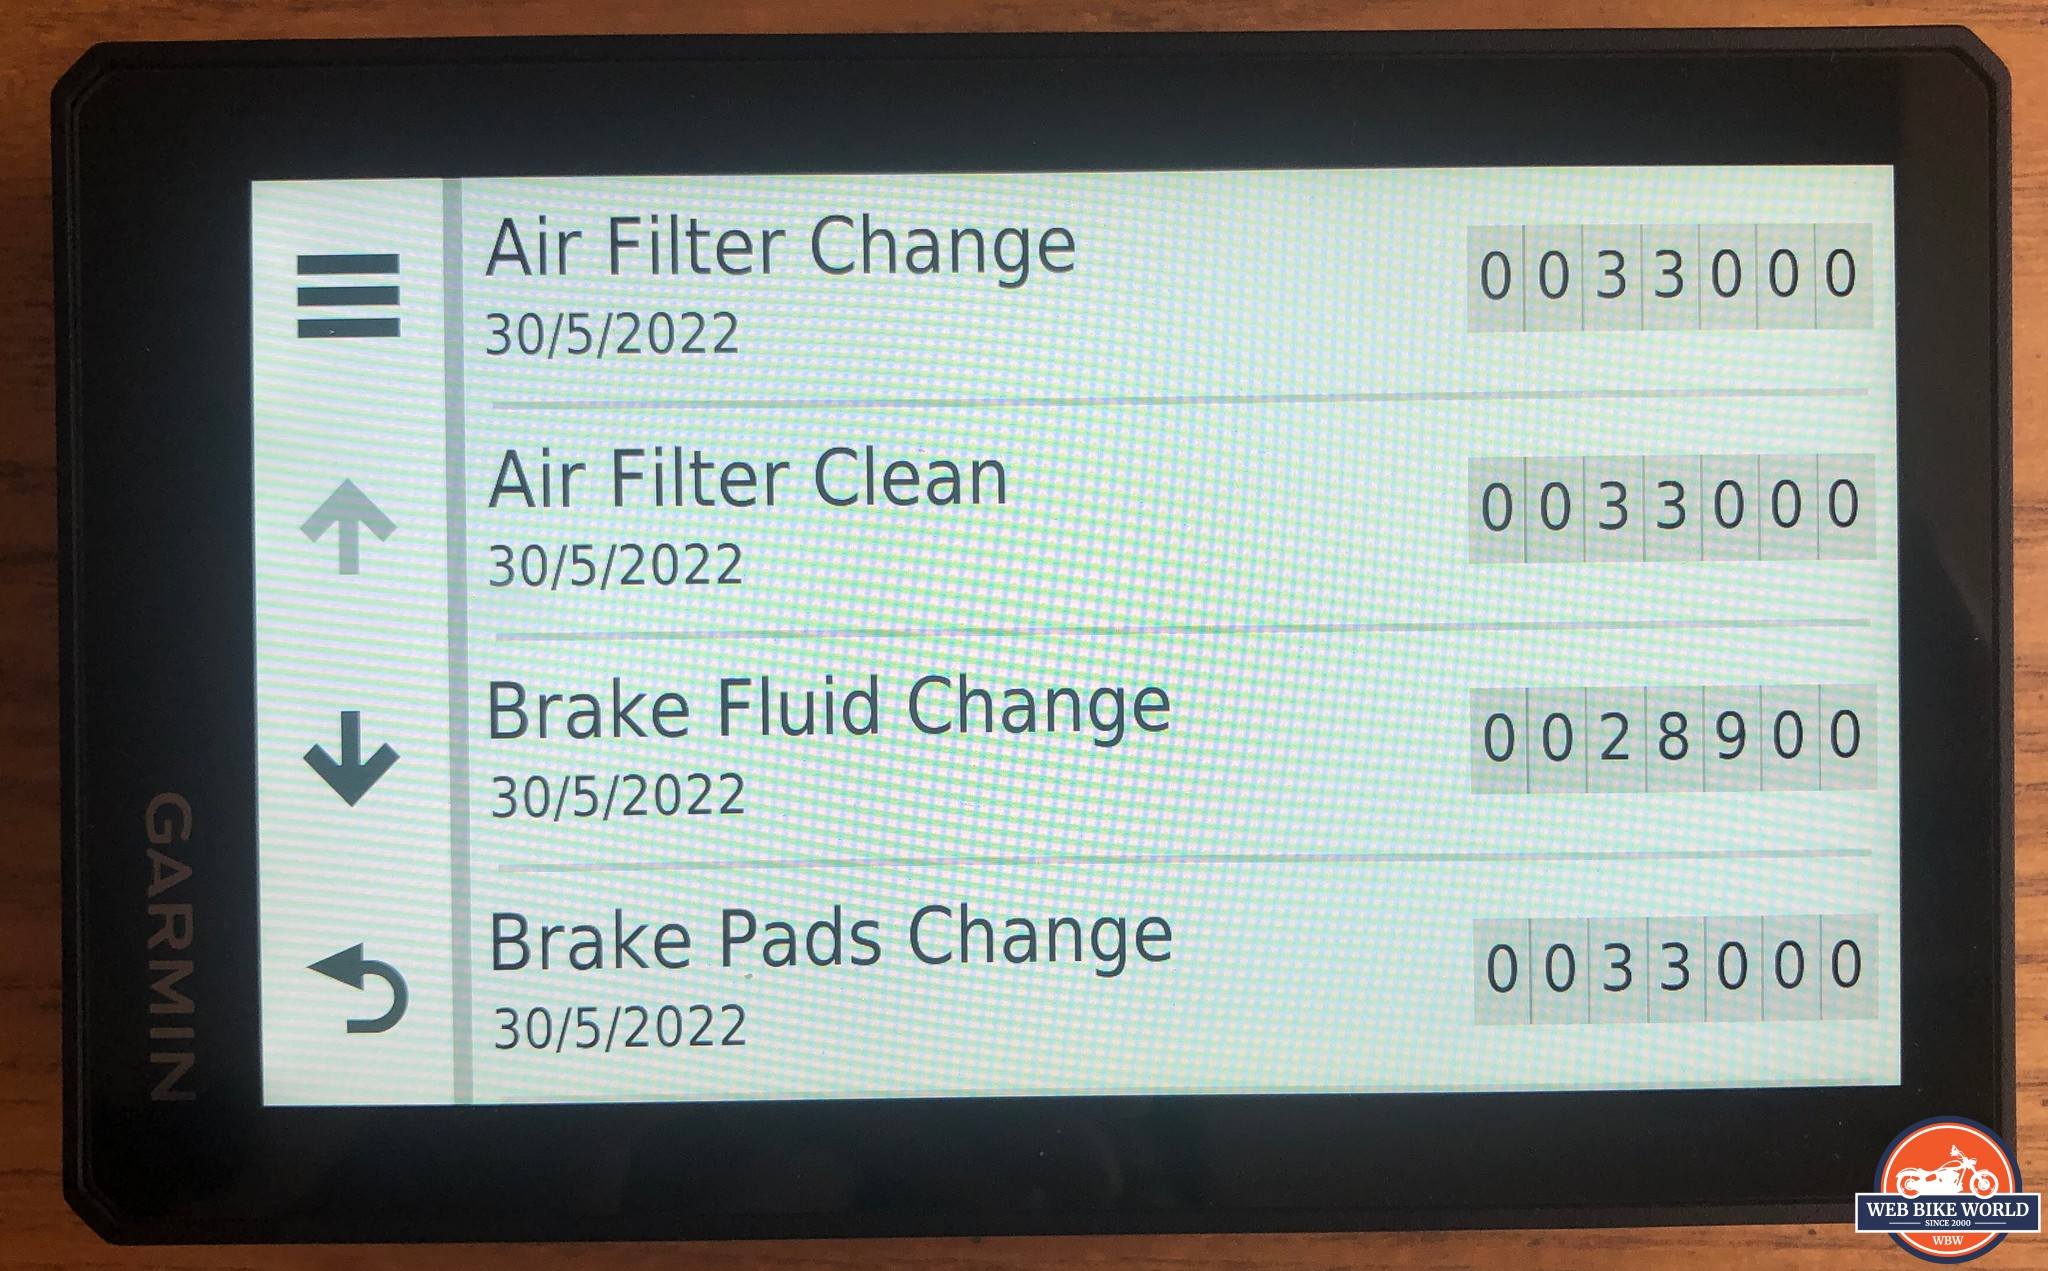 Air filter maintenance reminders